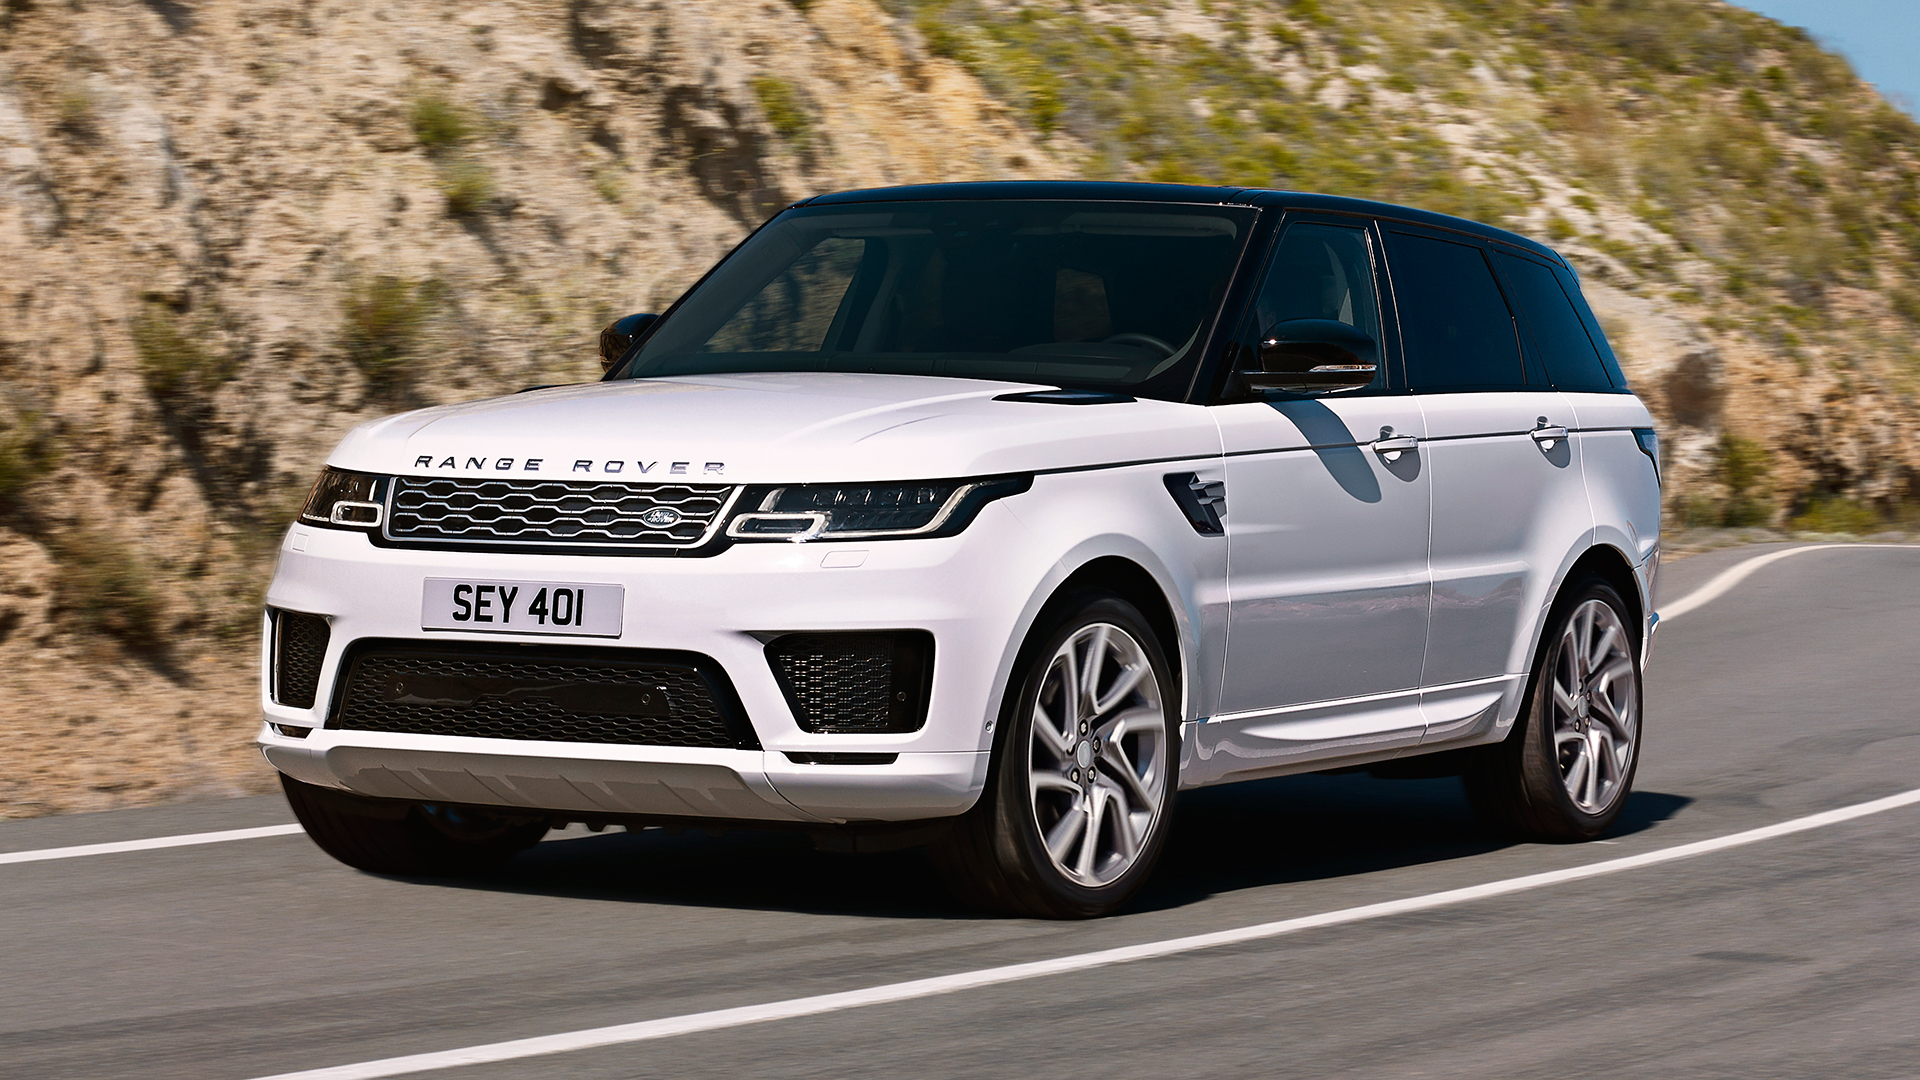 Used Land Rover Range Rover Sport Cars For Sale | AutoTrader UK